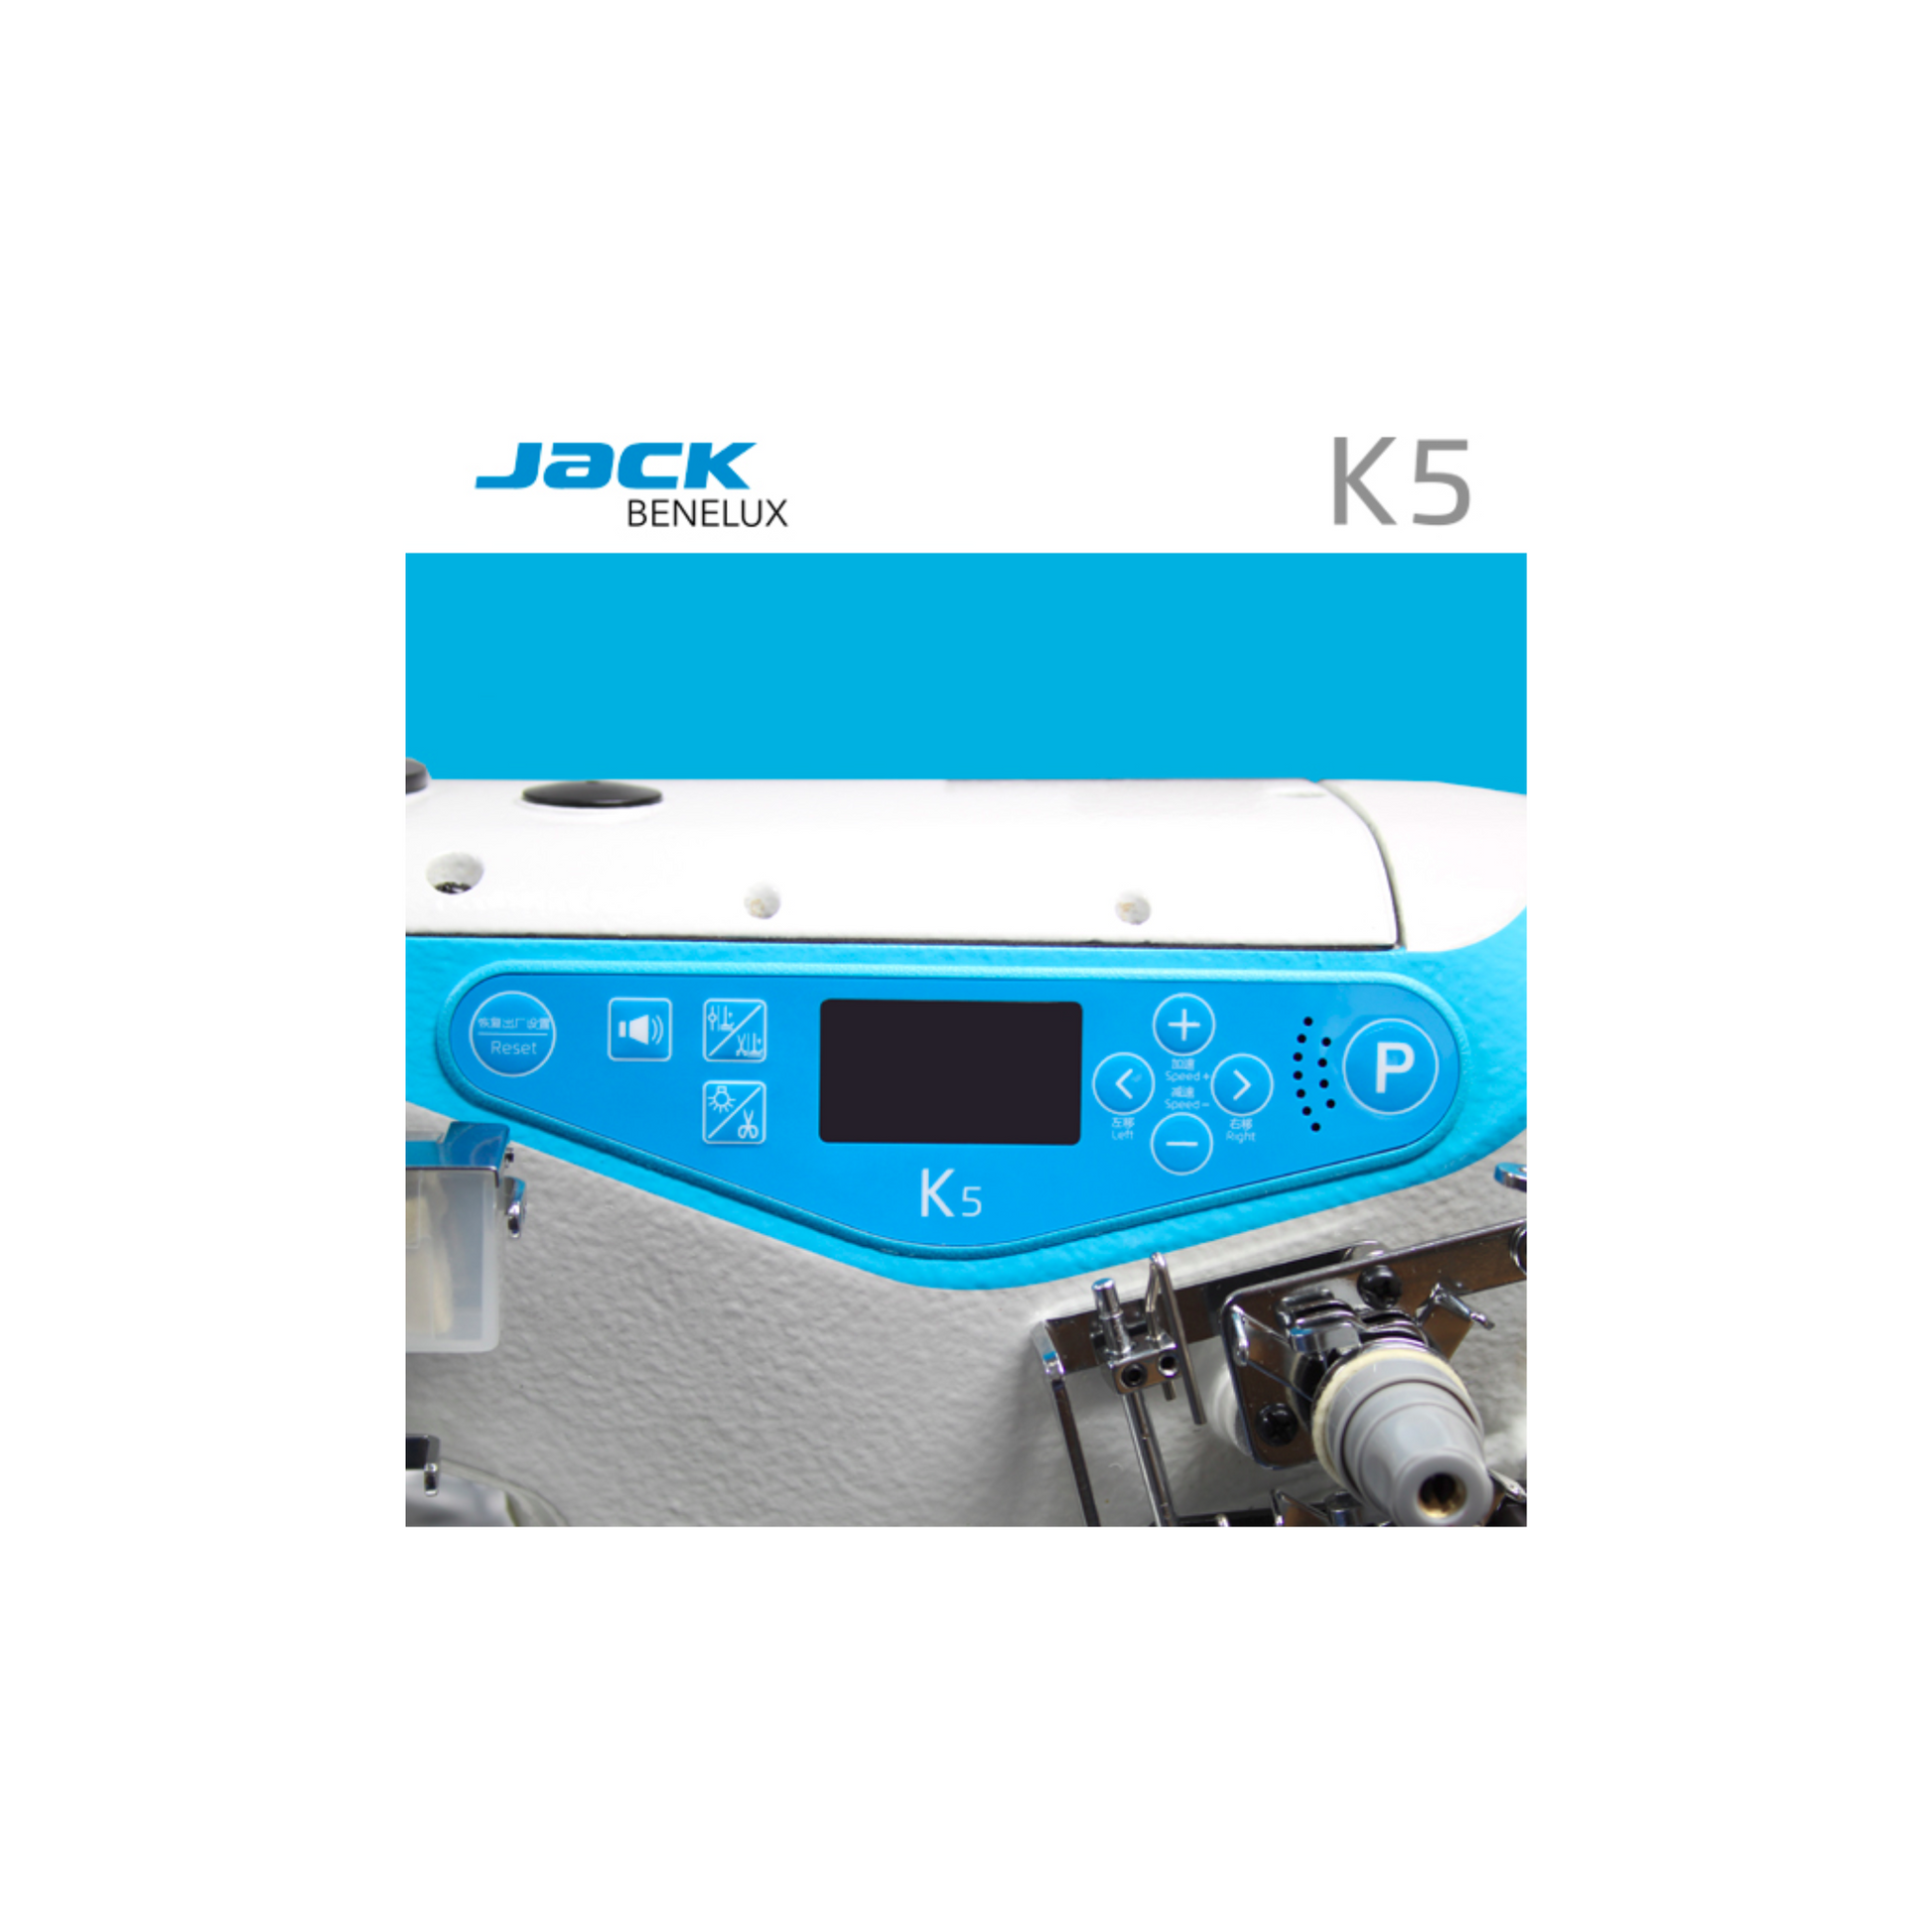 Jack K5-UT-01GB-x356 fully automatic cylinder arm coverstitch machine - Sewing machine - White - Close view